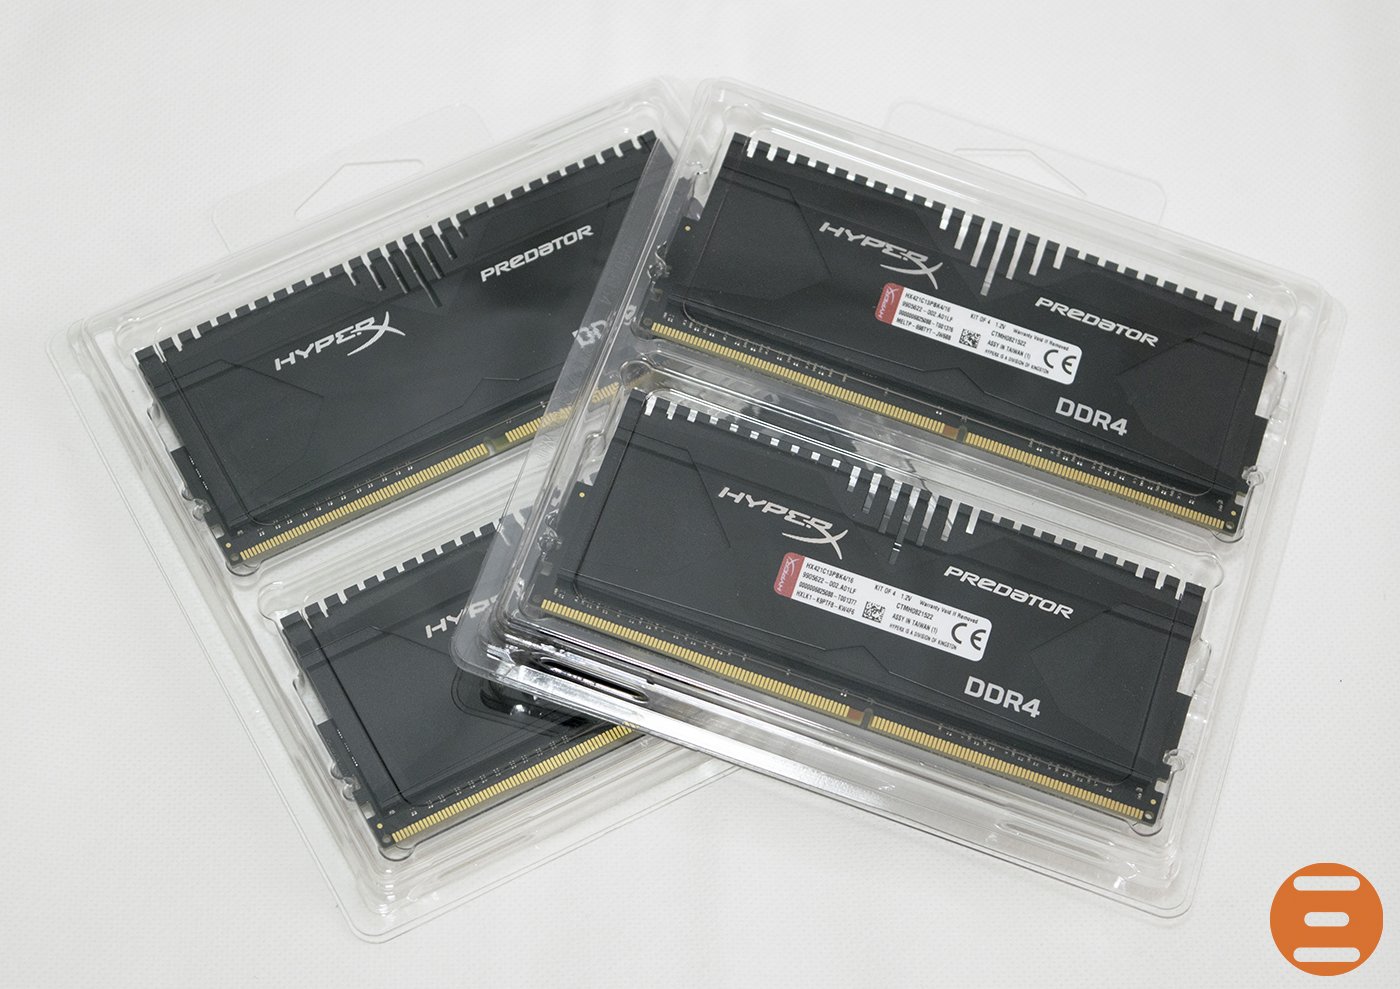 HyperX Predator 2133MHz DDR4 1